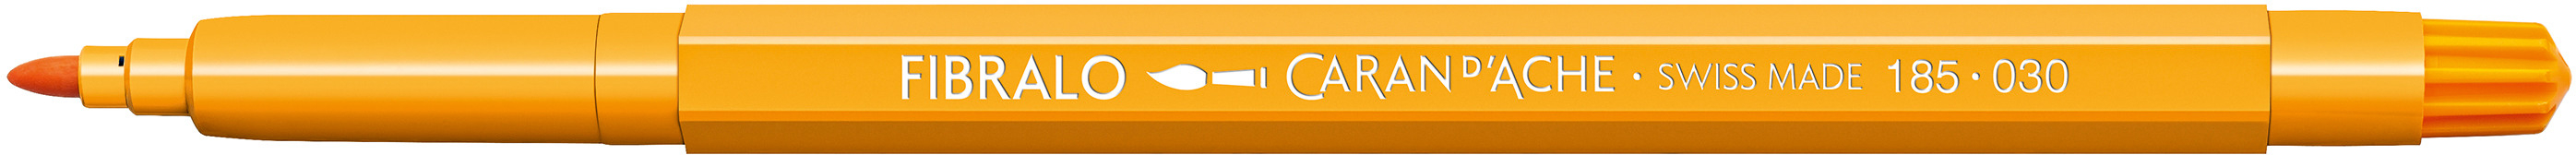 CARAN D'ACHE Fasermalstift Fibralo 185.030 orange